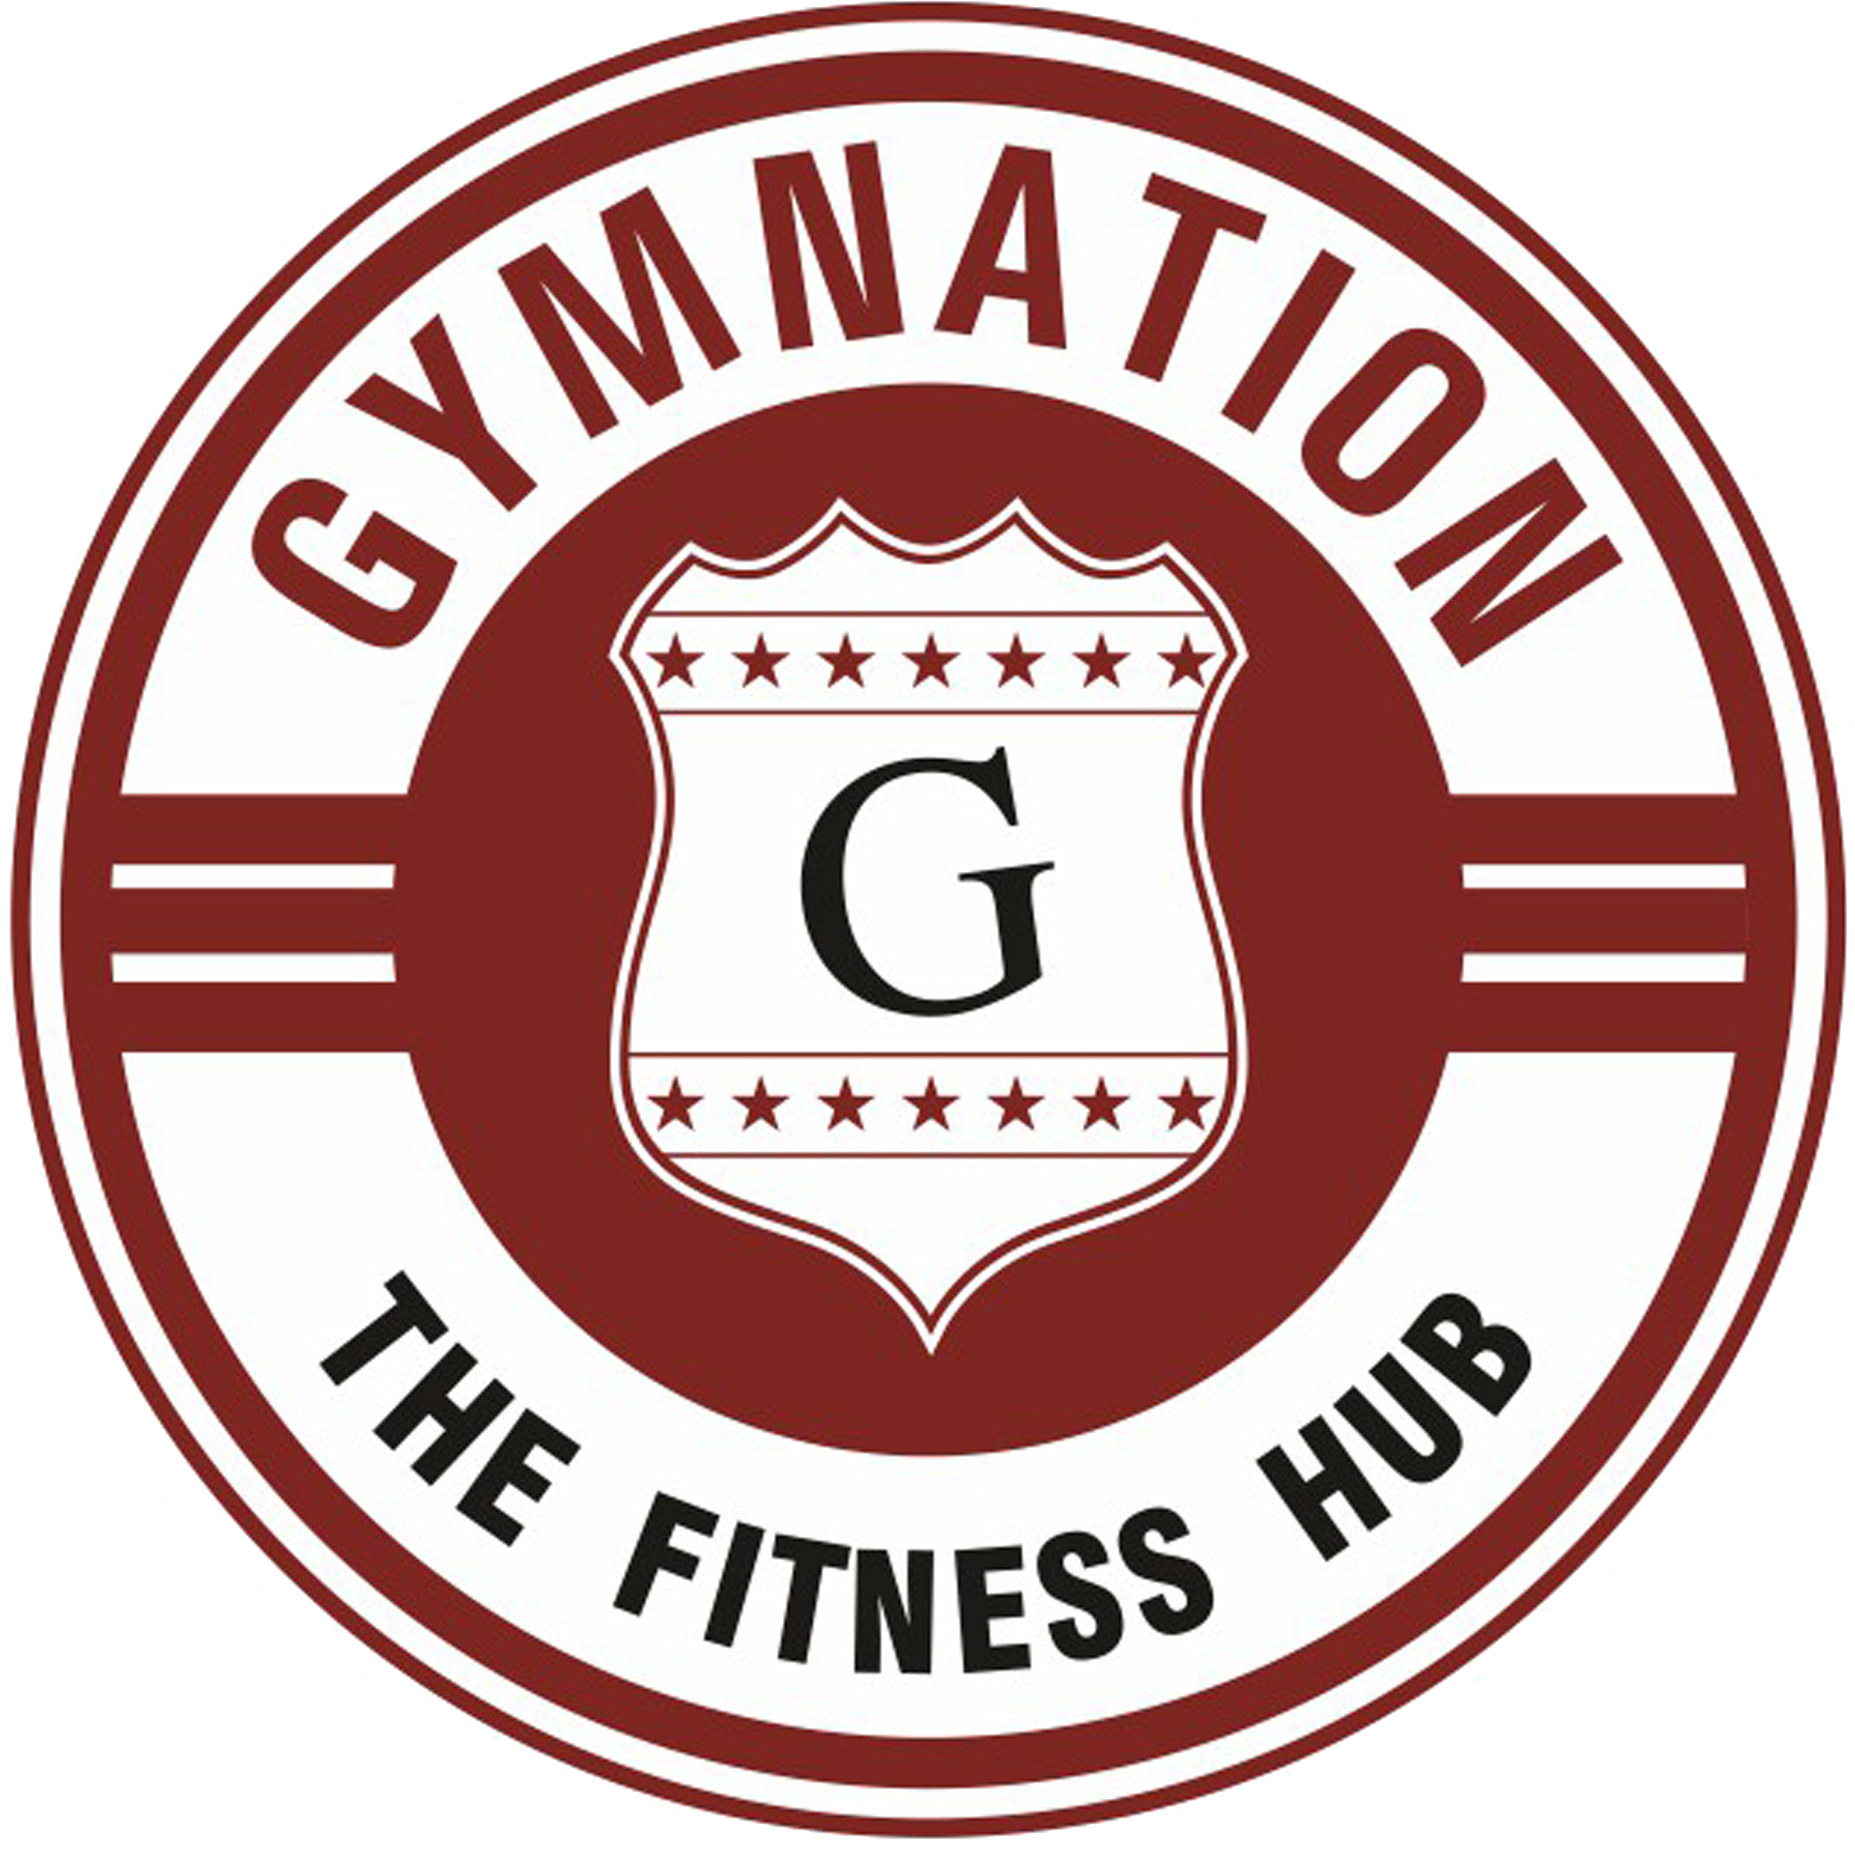 Gymnation the fitness hub|Salon|Active Life